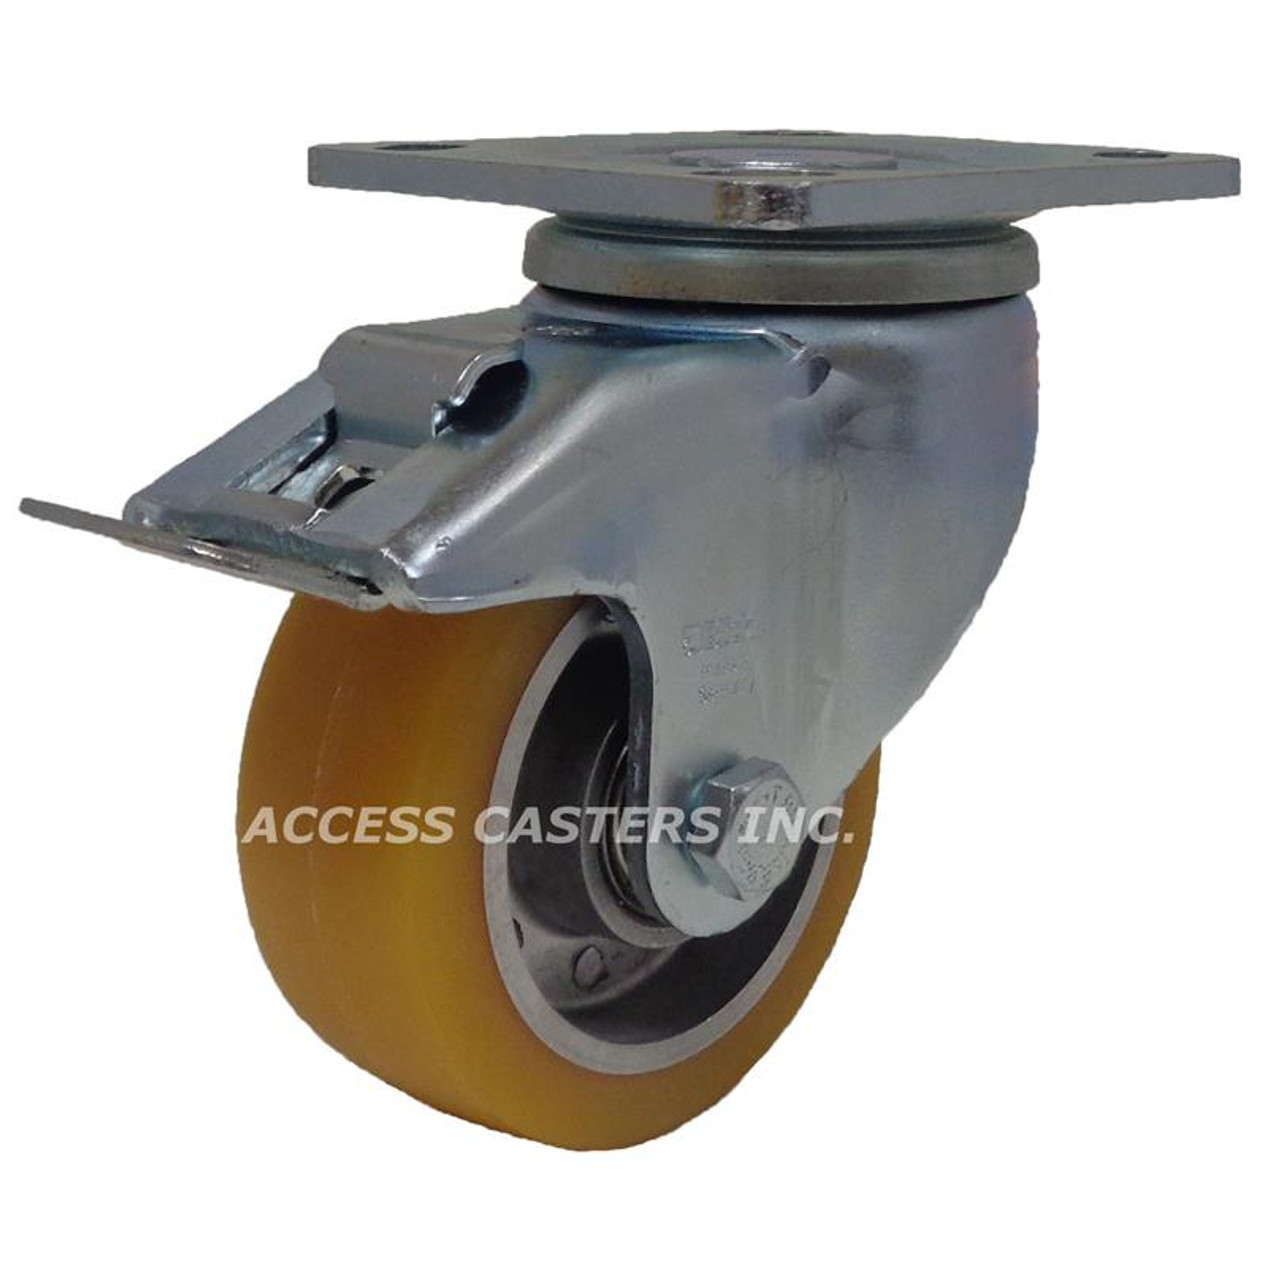 LH-ALTH 150K-16-FI-CO Blickle 6" Swivel Caster ALTH Wheel Plate Ball Bearin